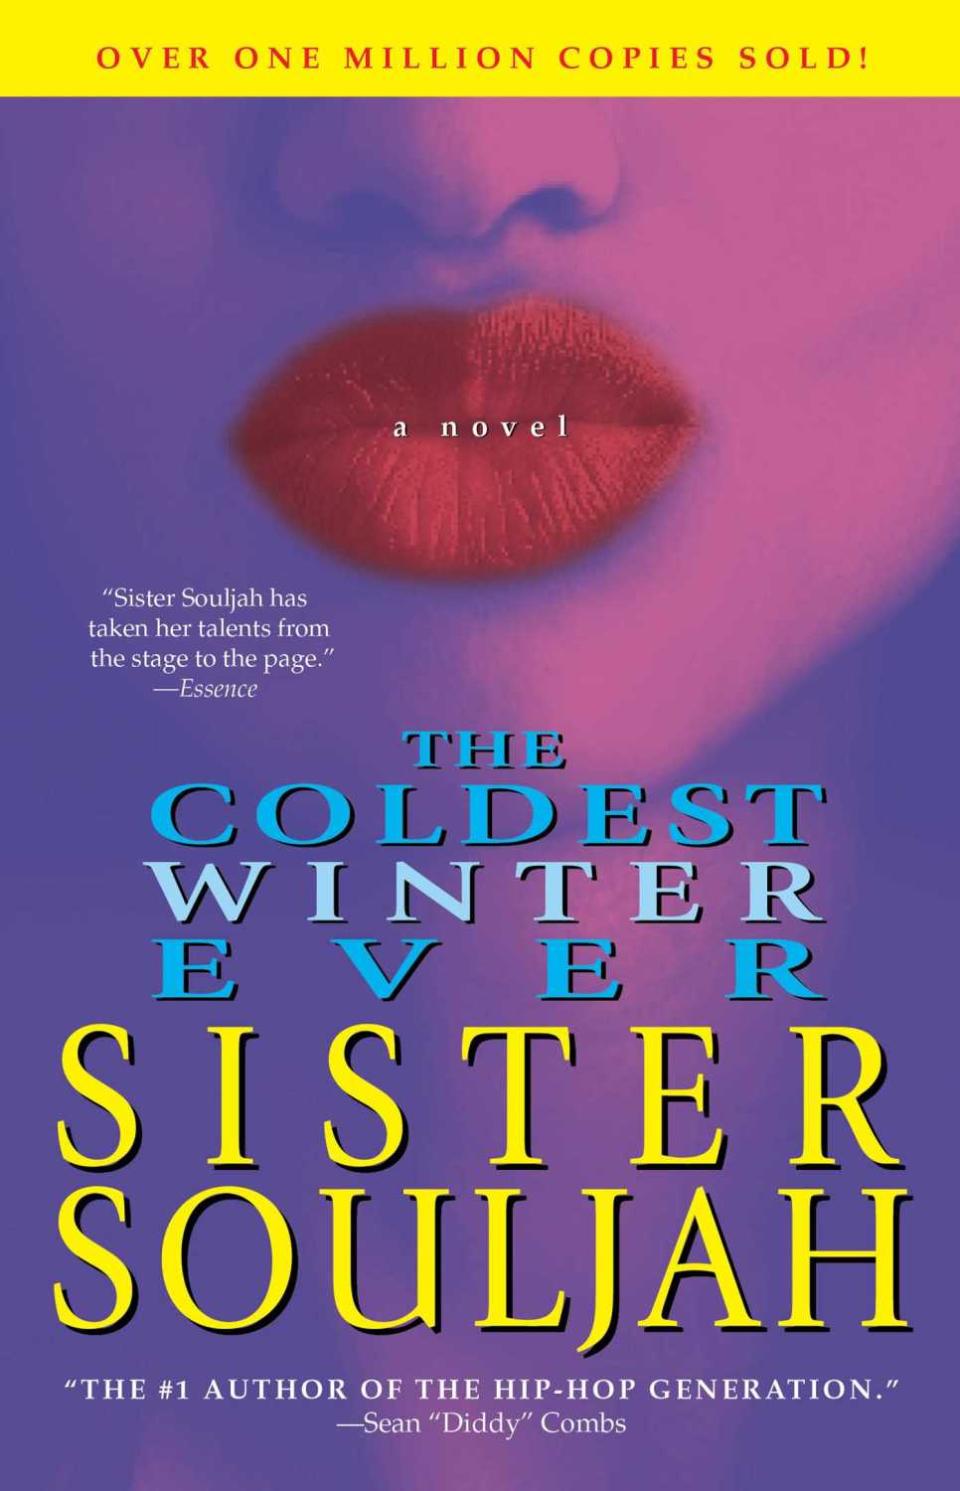 Book jacket for Sister Souljah's "The Coldest Winter Ever"